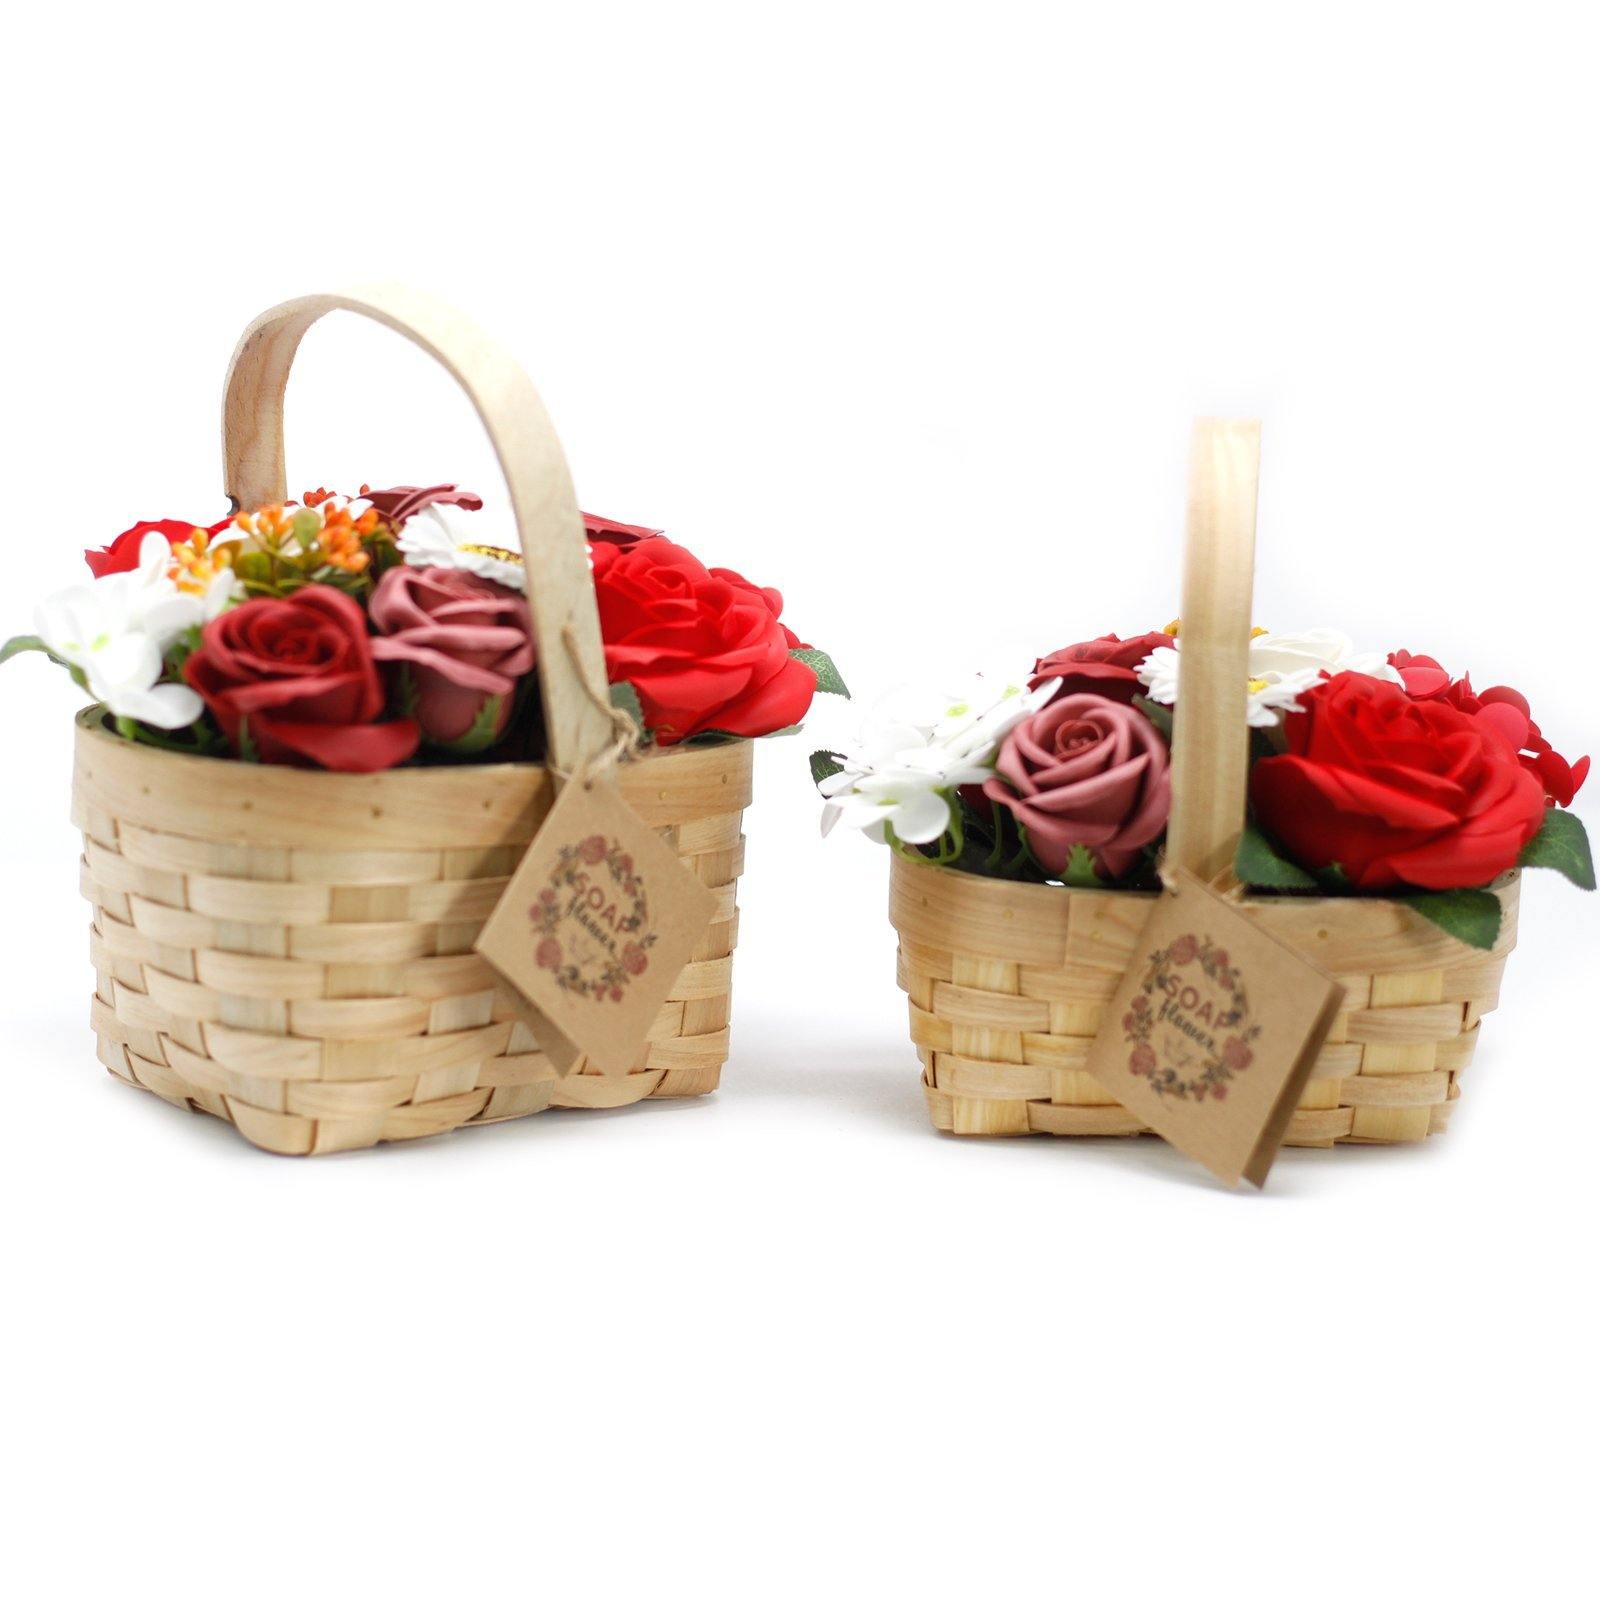 Scented Soap Red Flower Bouquet in Wicker Basket - Bath Spa Gift - Kporium Home & Garden